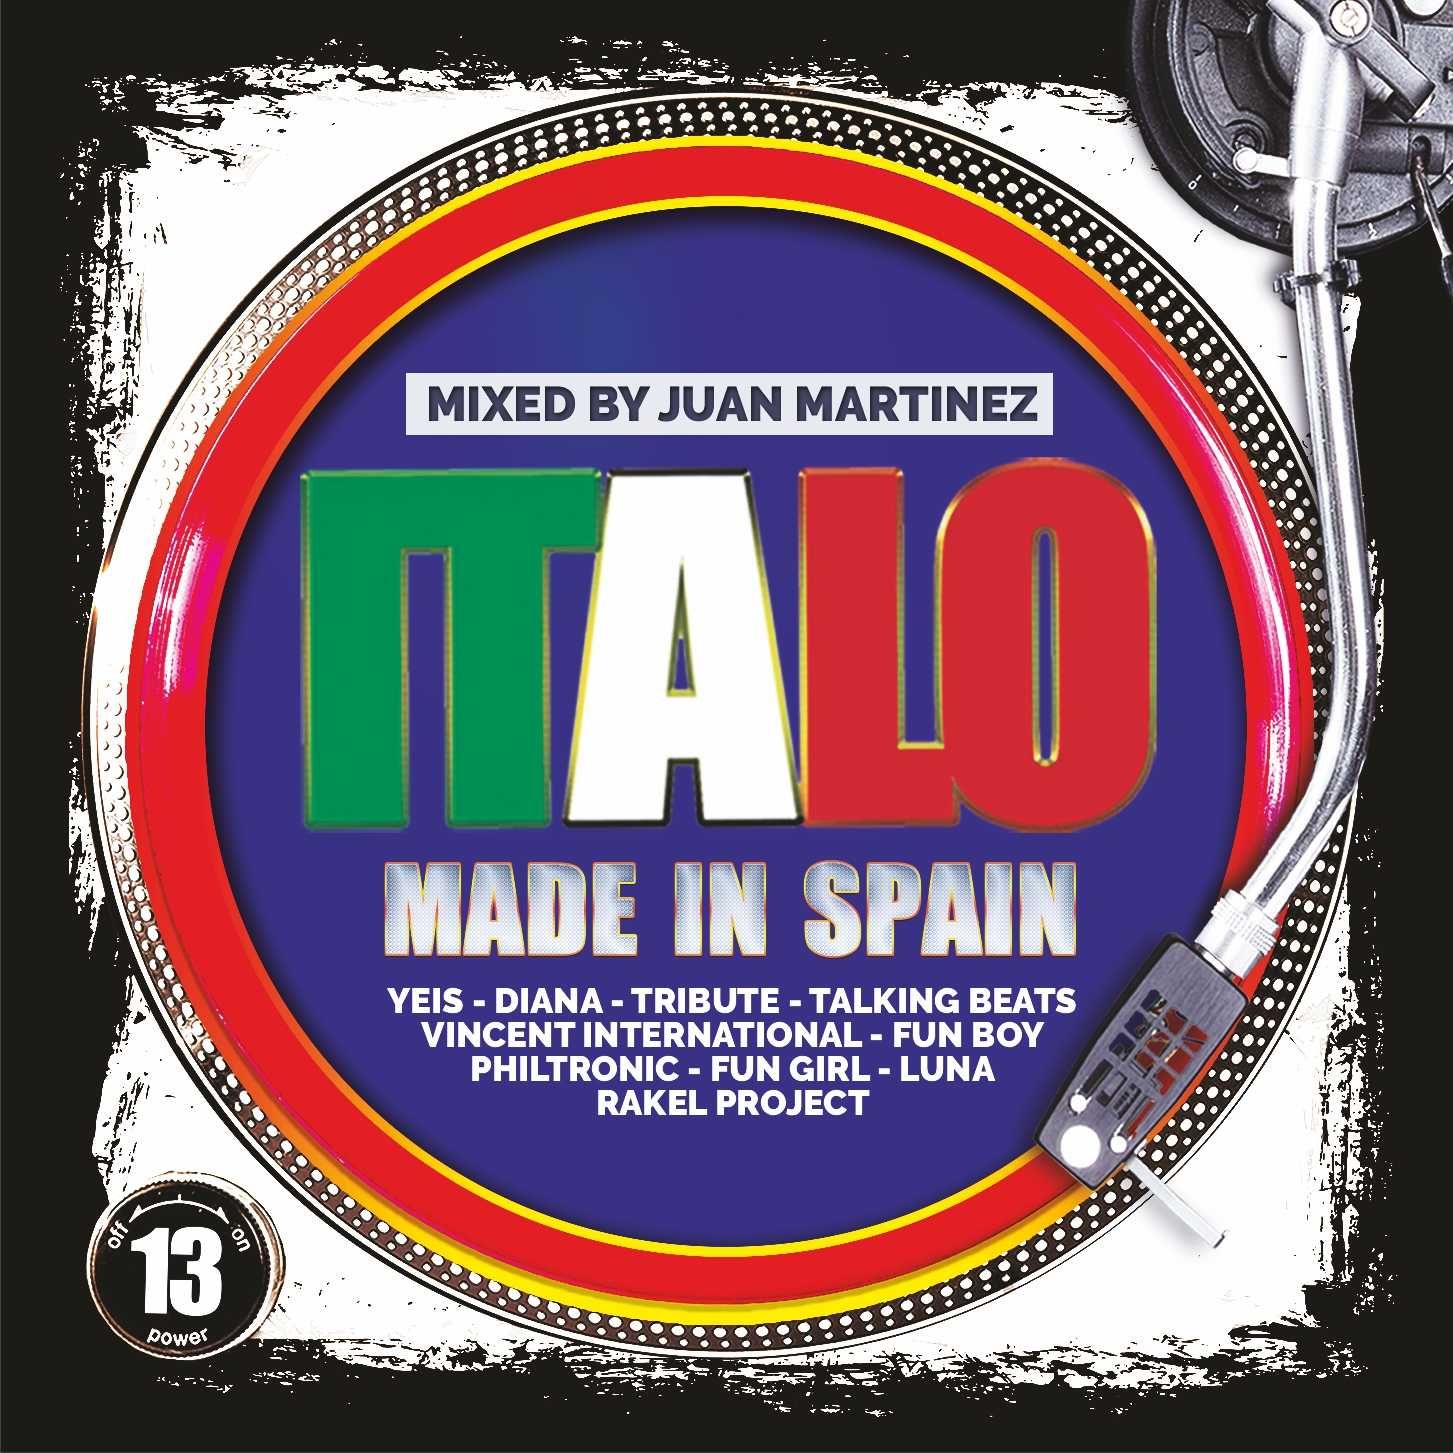 Italo Made In Spain Vol.13 (2 CD) MXCDR154 (SPAIN)